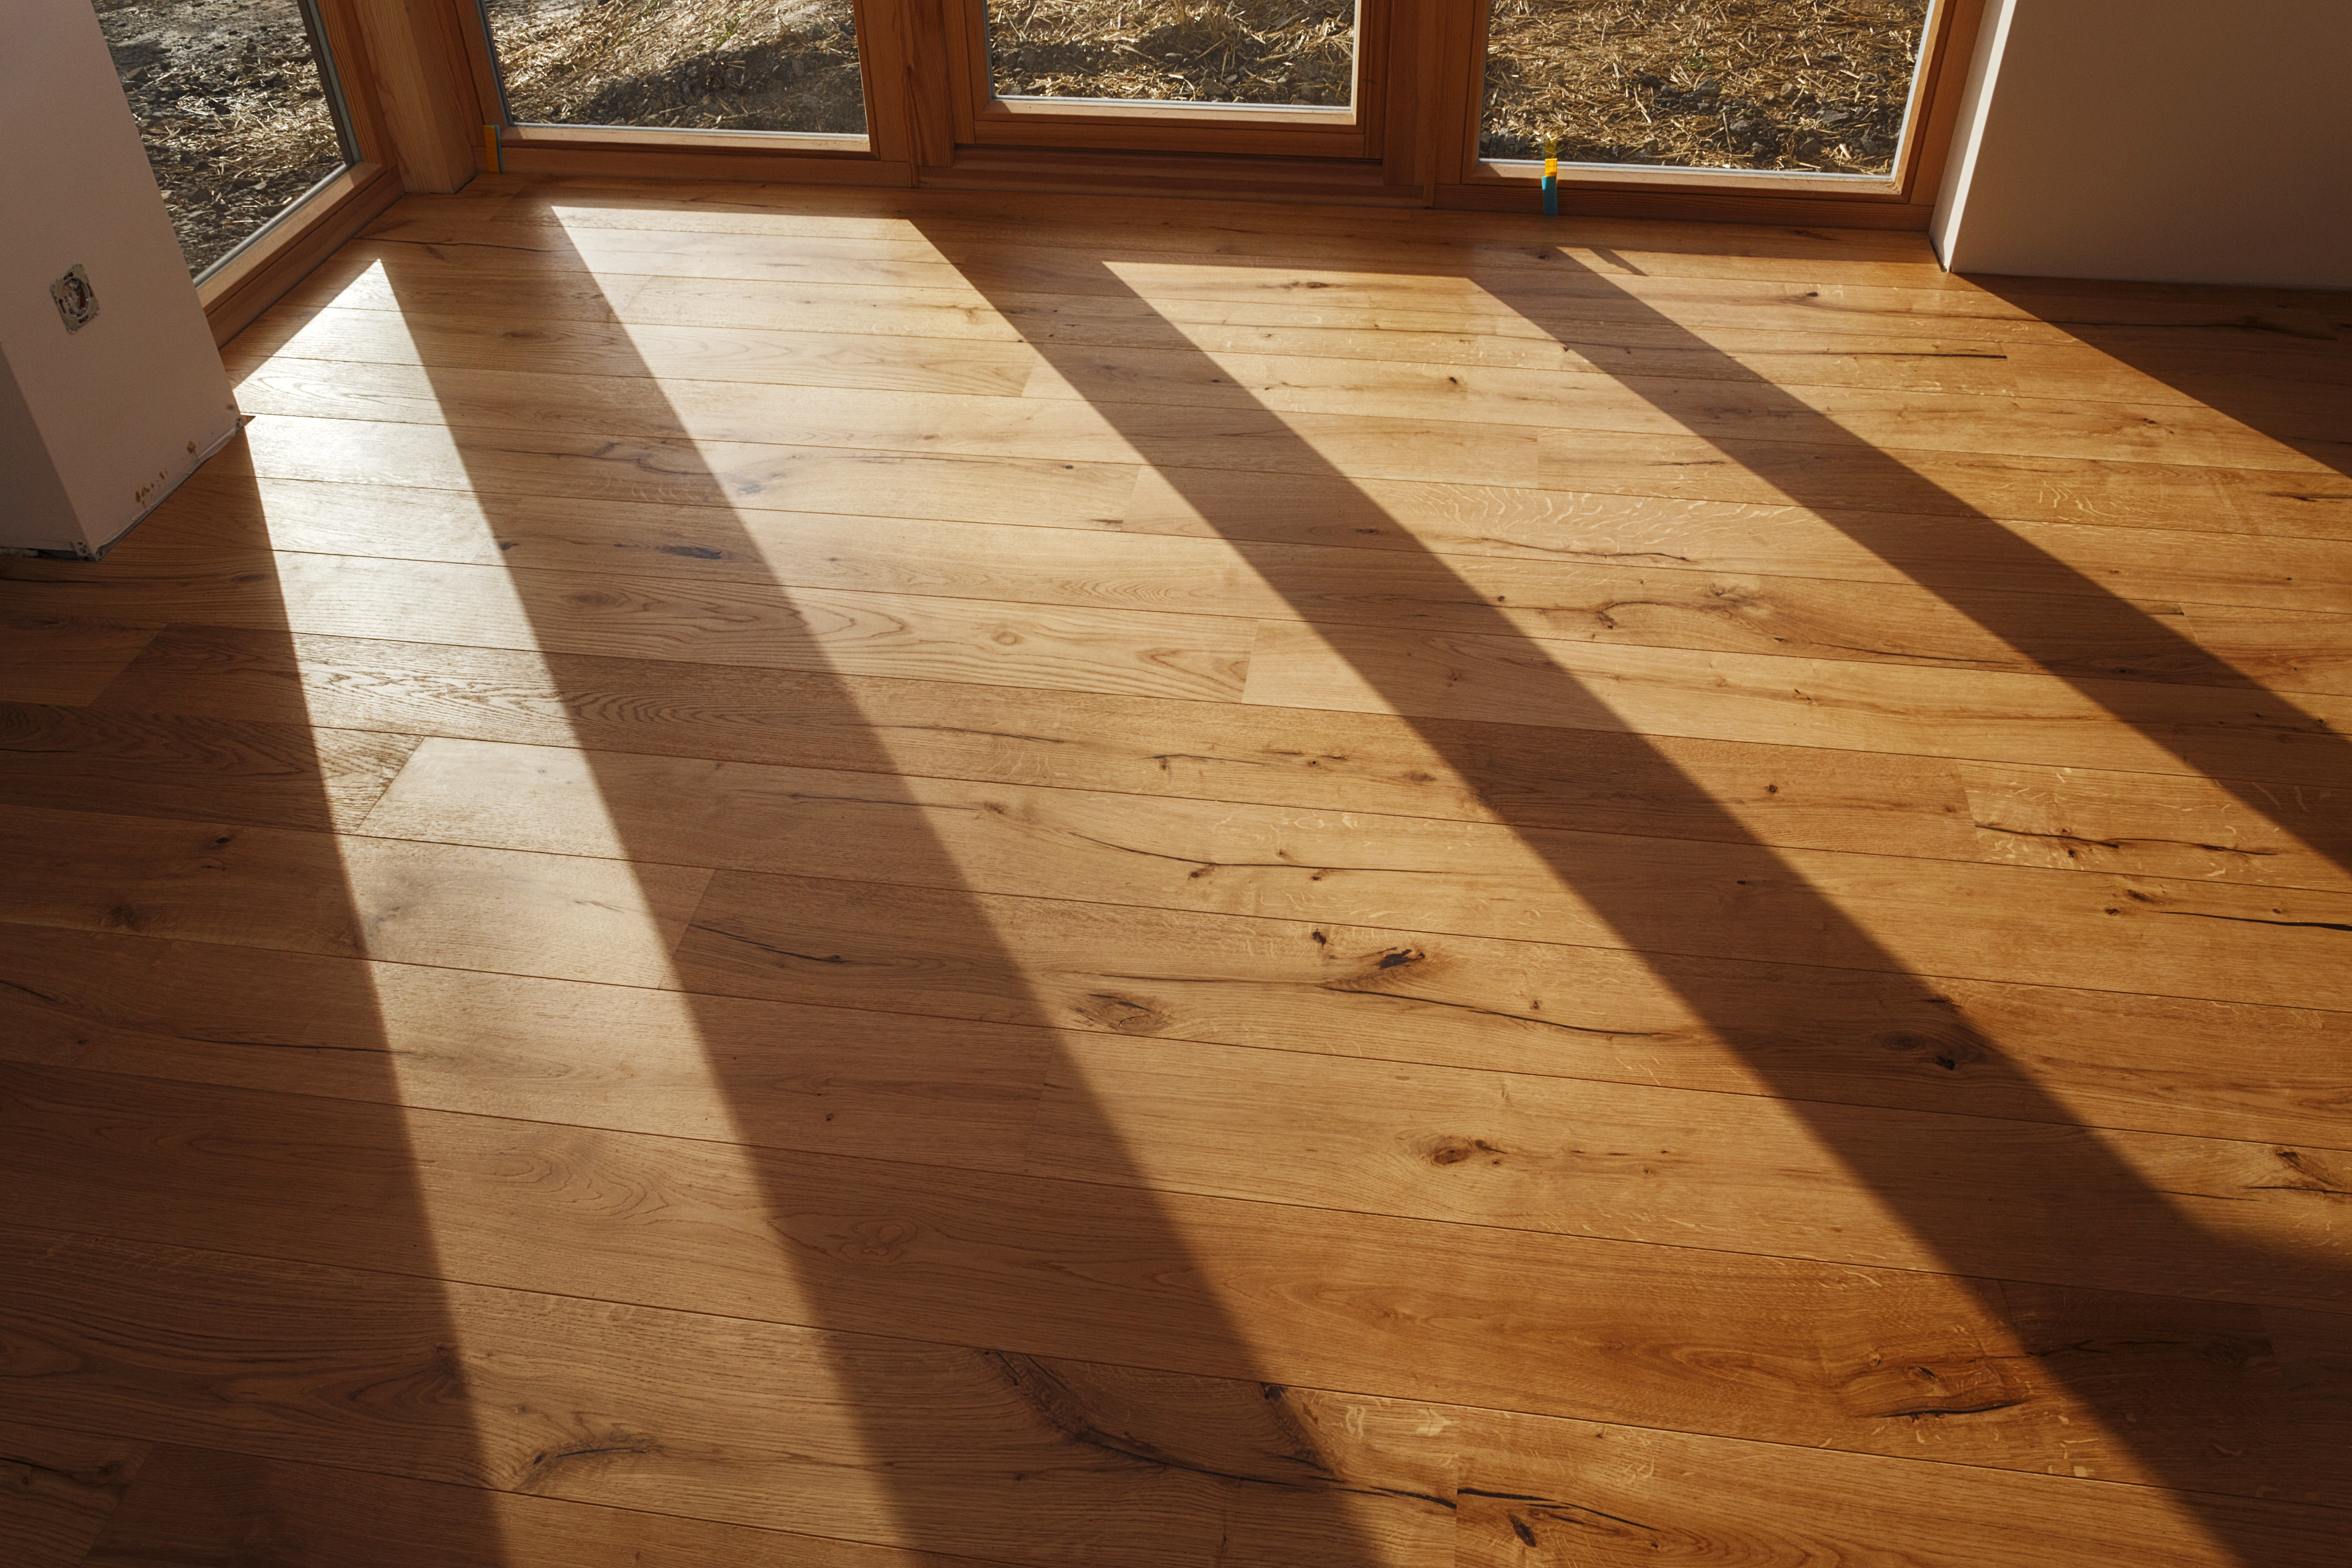 Wood Flooring Hardwood Versus, Fake Hardwood Floor Cost